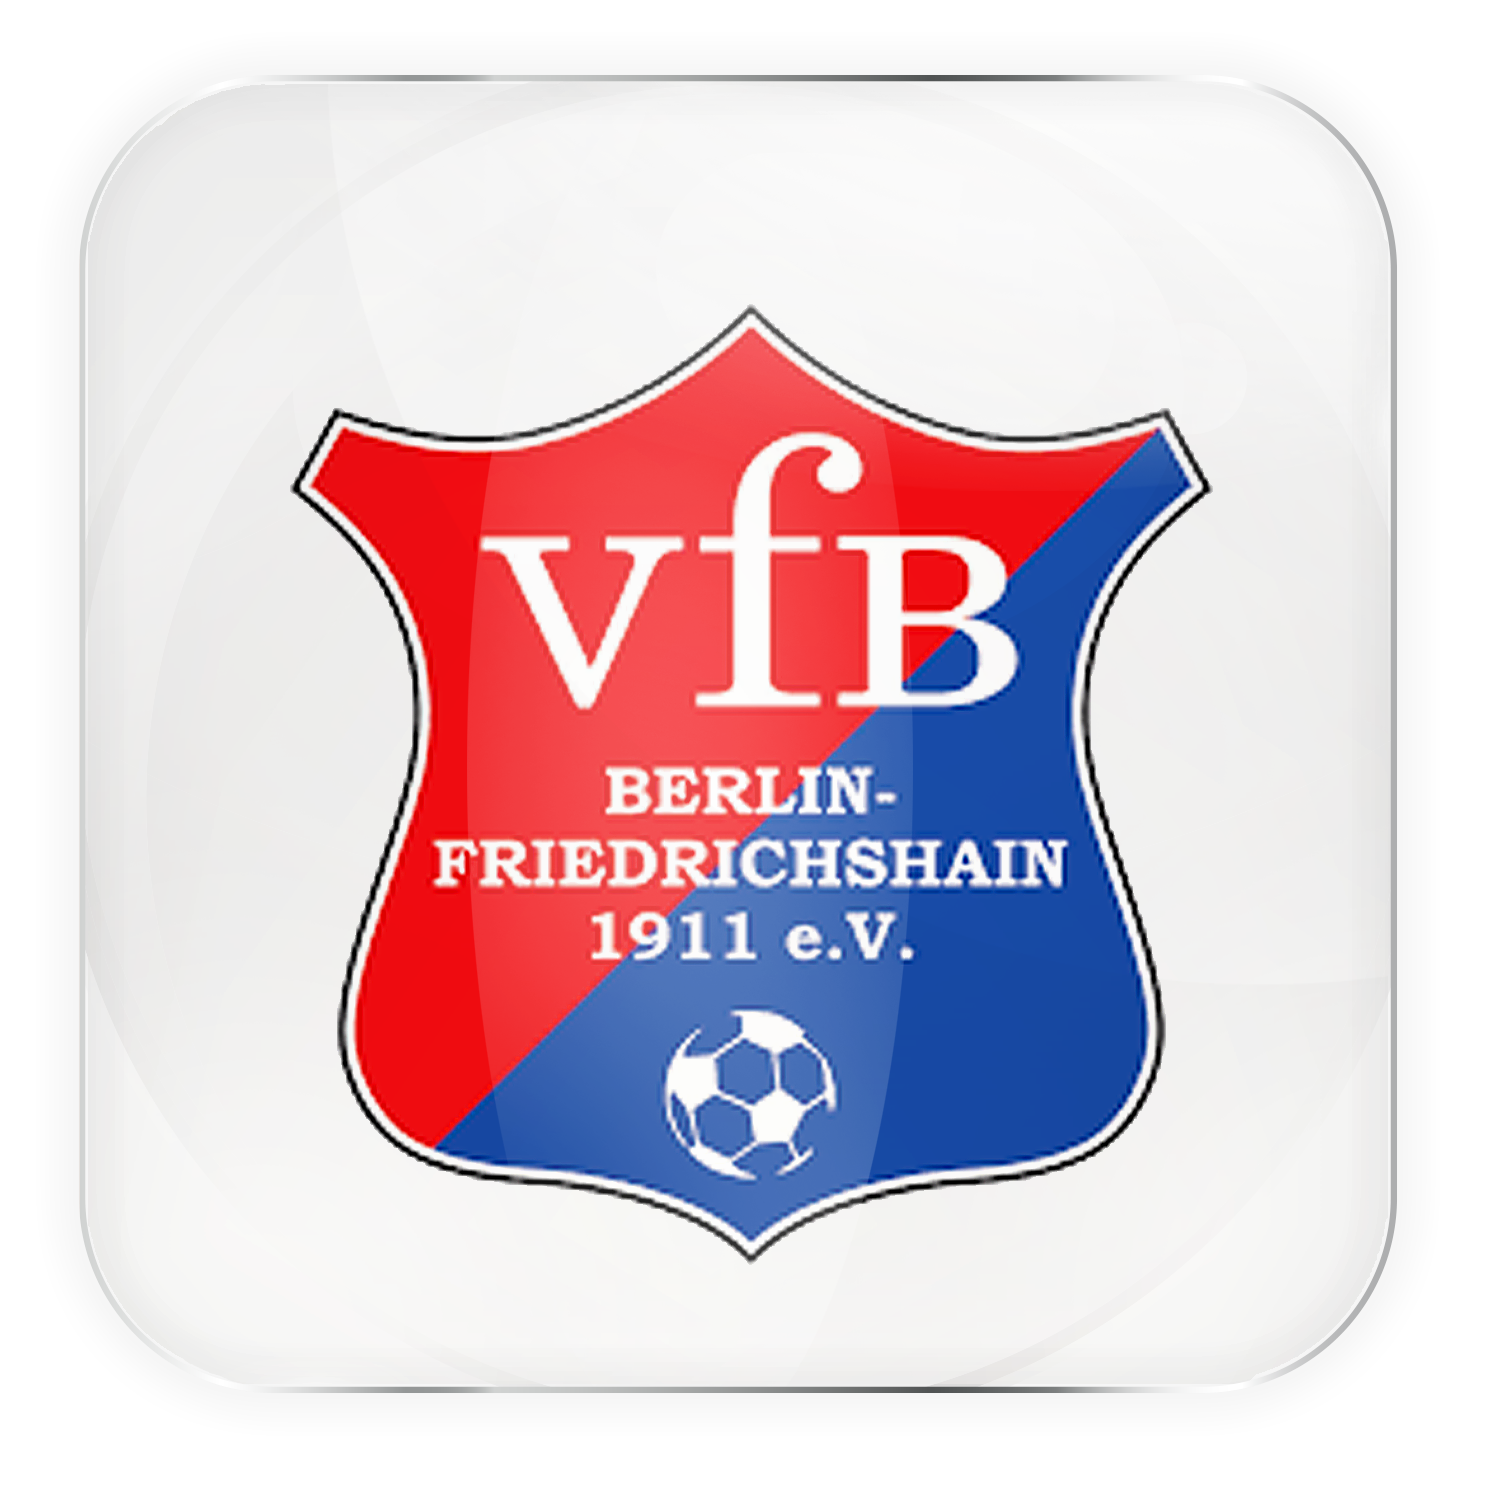 VFB BERLIN-FRIEDRICHSHAIN 1911